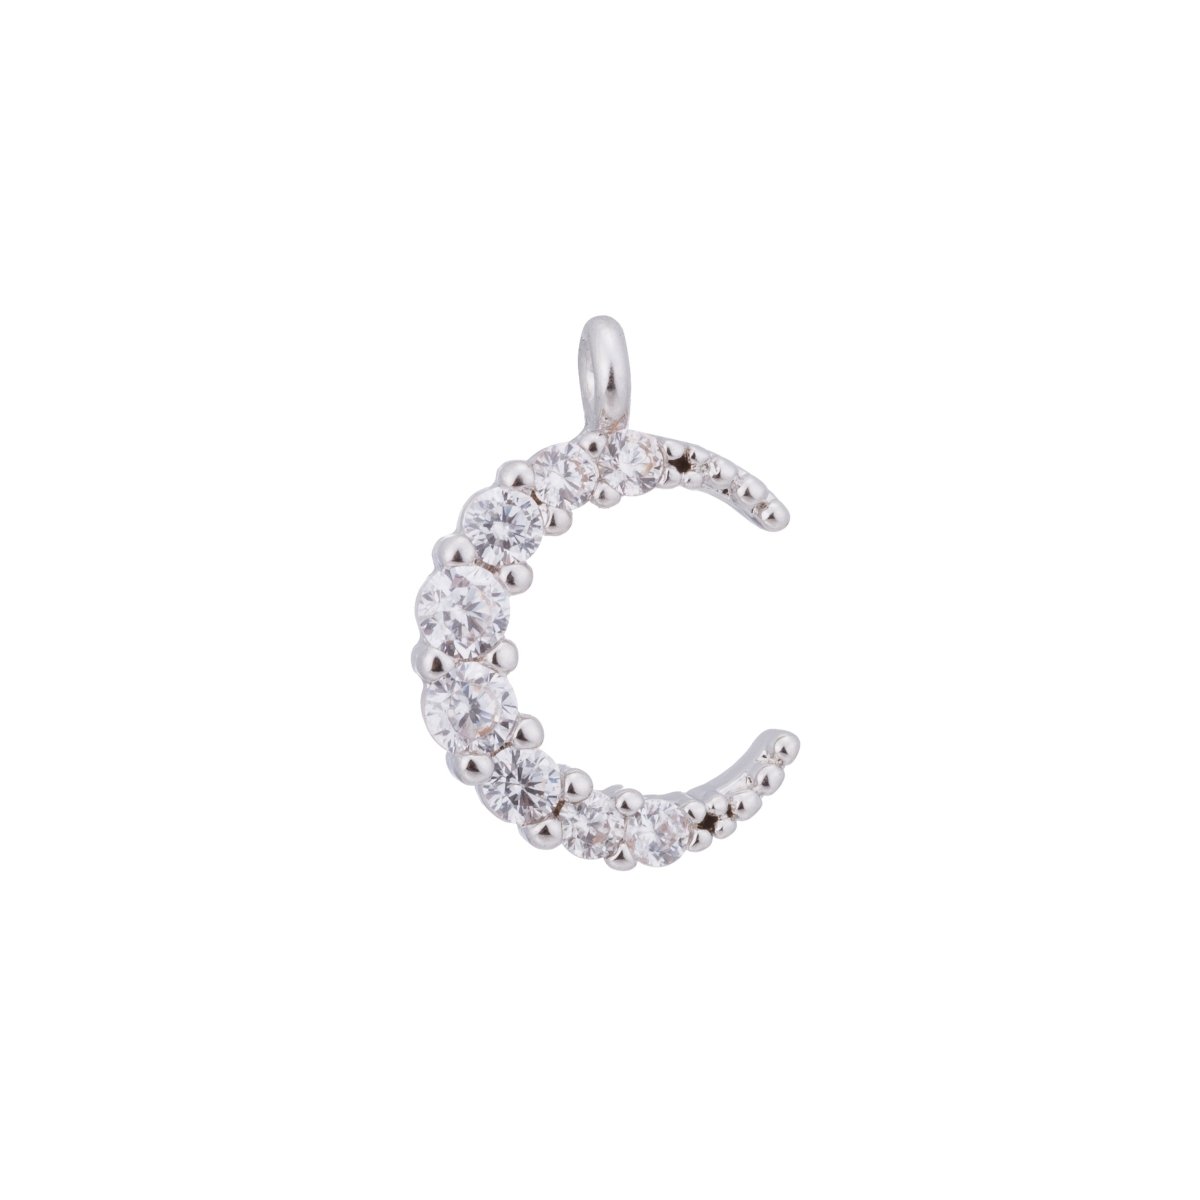 Silver Moon Beam, Moonlight, Crescent, Wish, Dream Celestial DIY Cubic Zirconia Bracelet Charm Bead Findings Pendant For Jewelry Making - DLUXCA